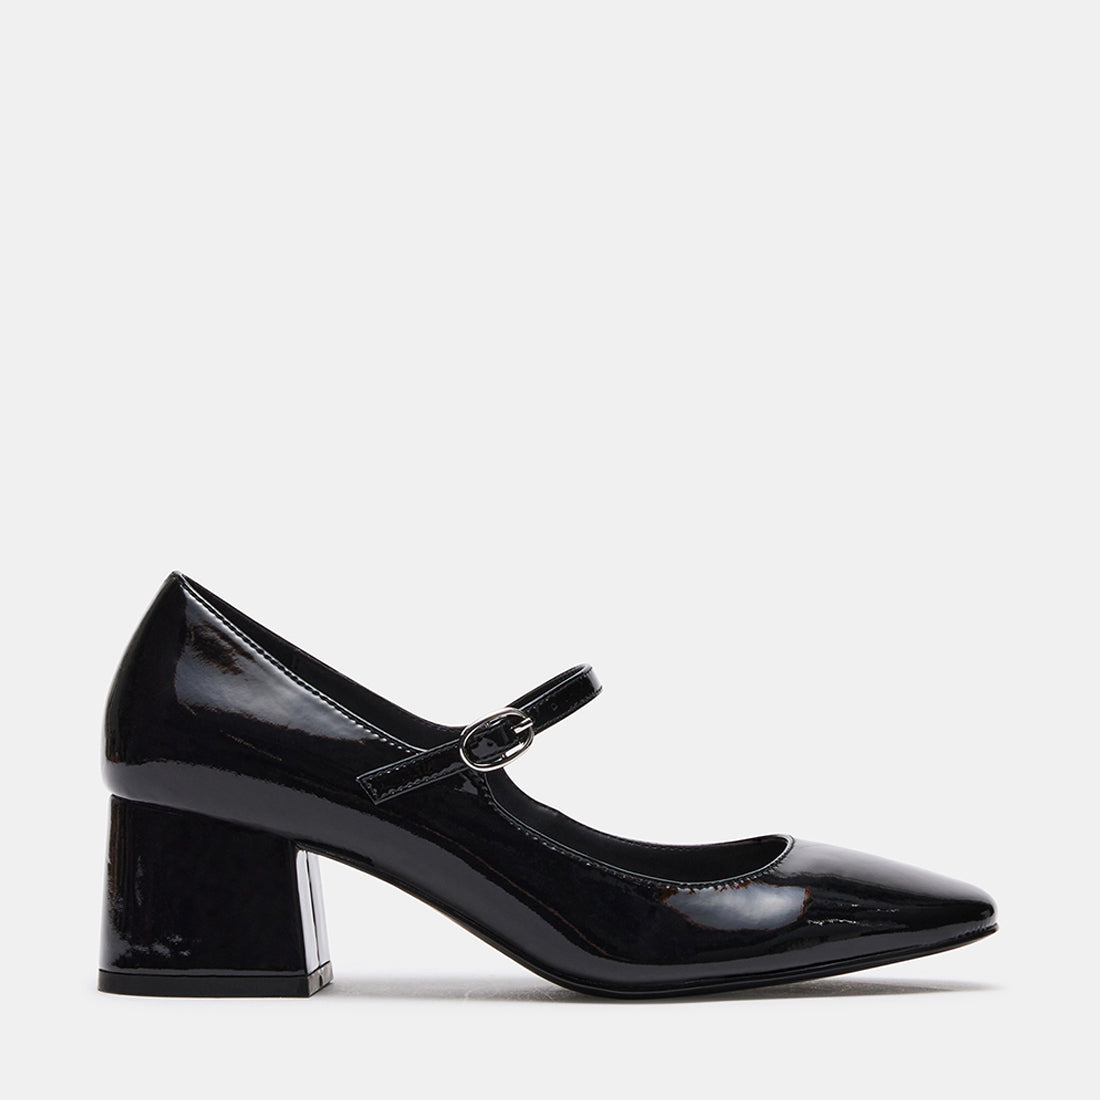 HAWKE Black Patent Mary Jane Block Heel Pumps | Women's Designer Heels ...